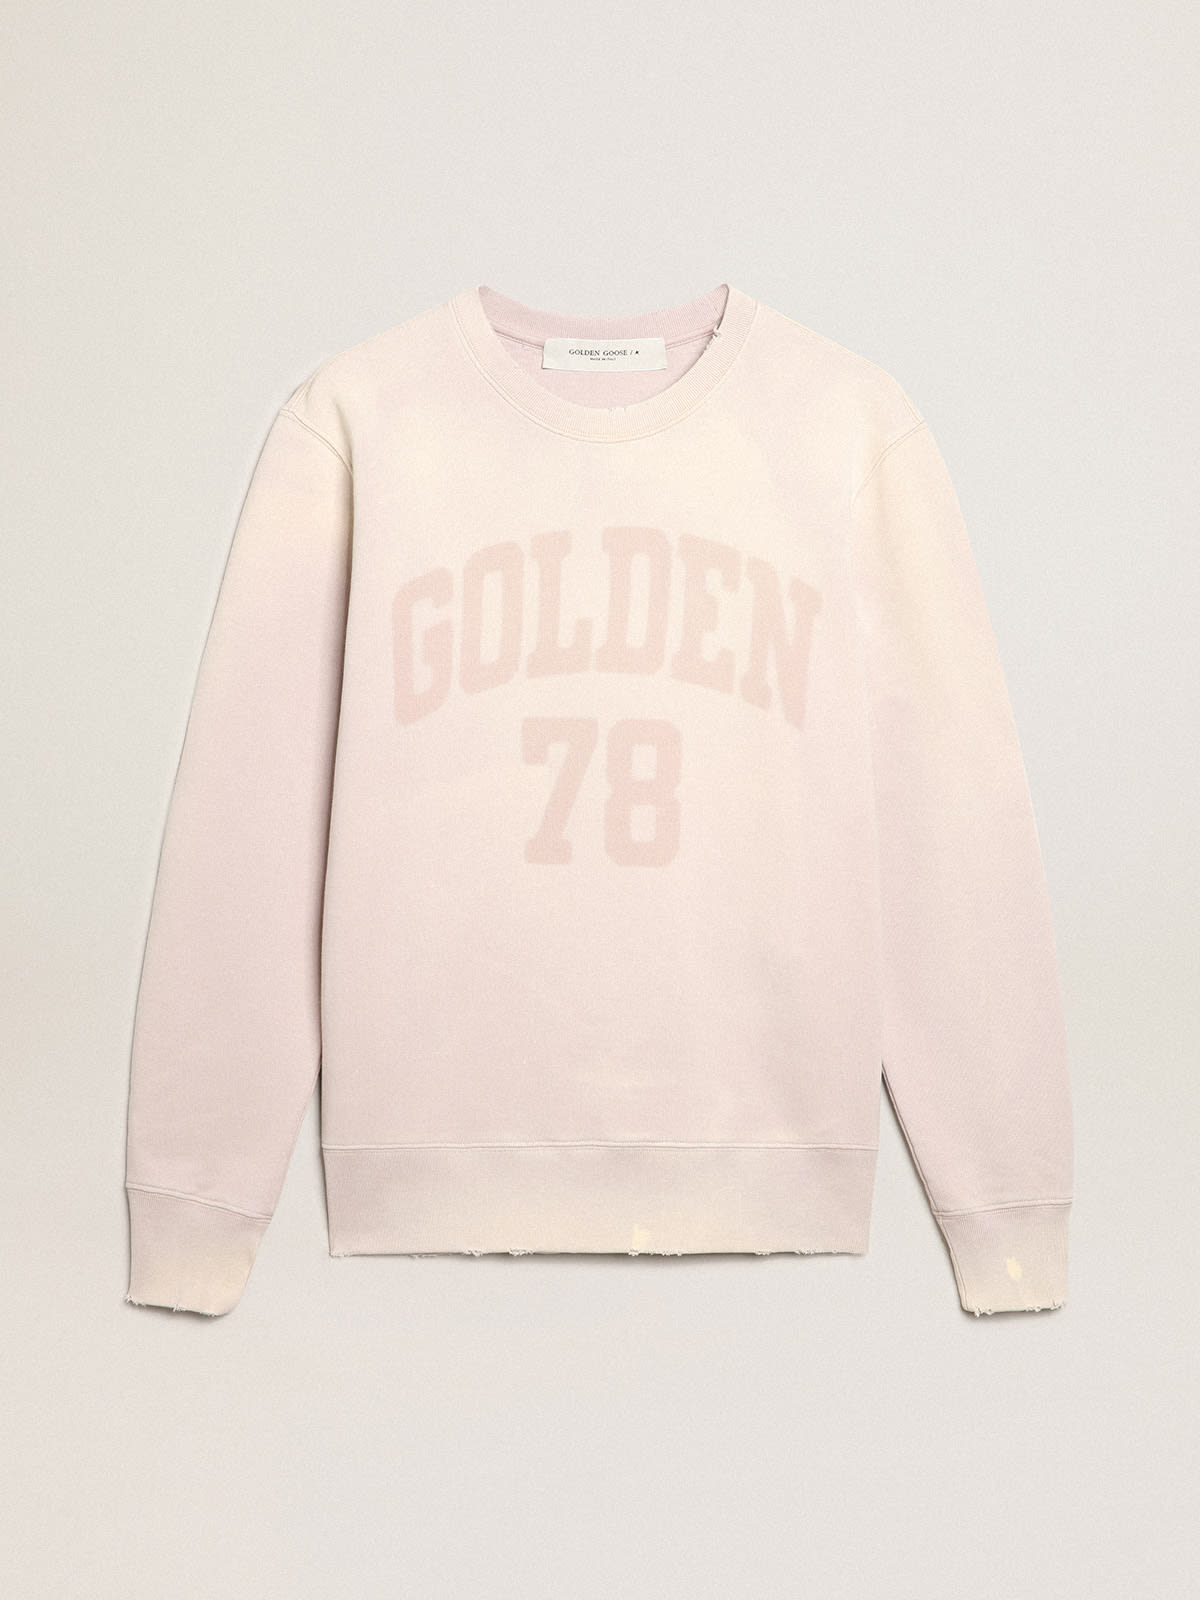 Golden Goose - Blassrosa Sweatshirt mit Distressed-Finish in 